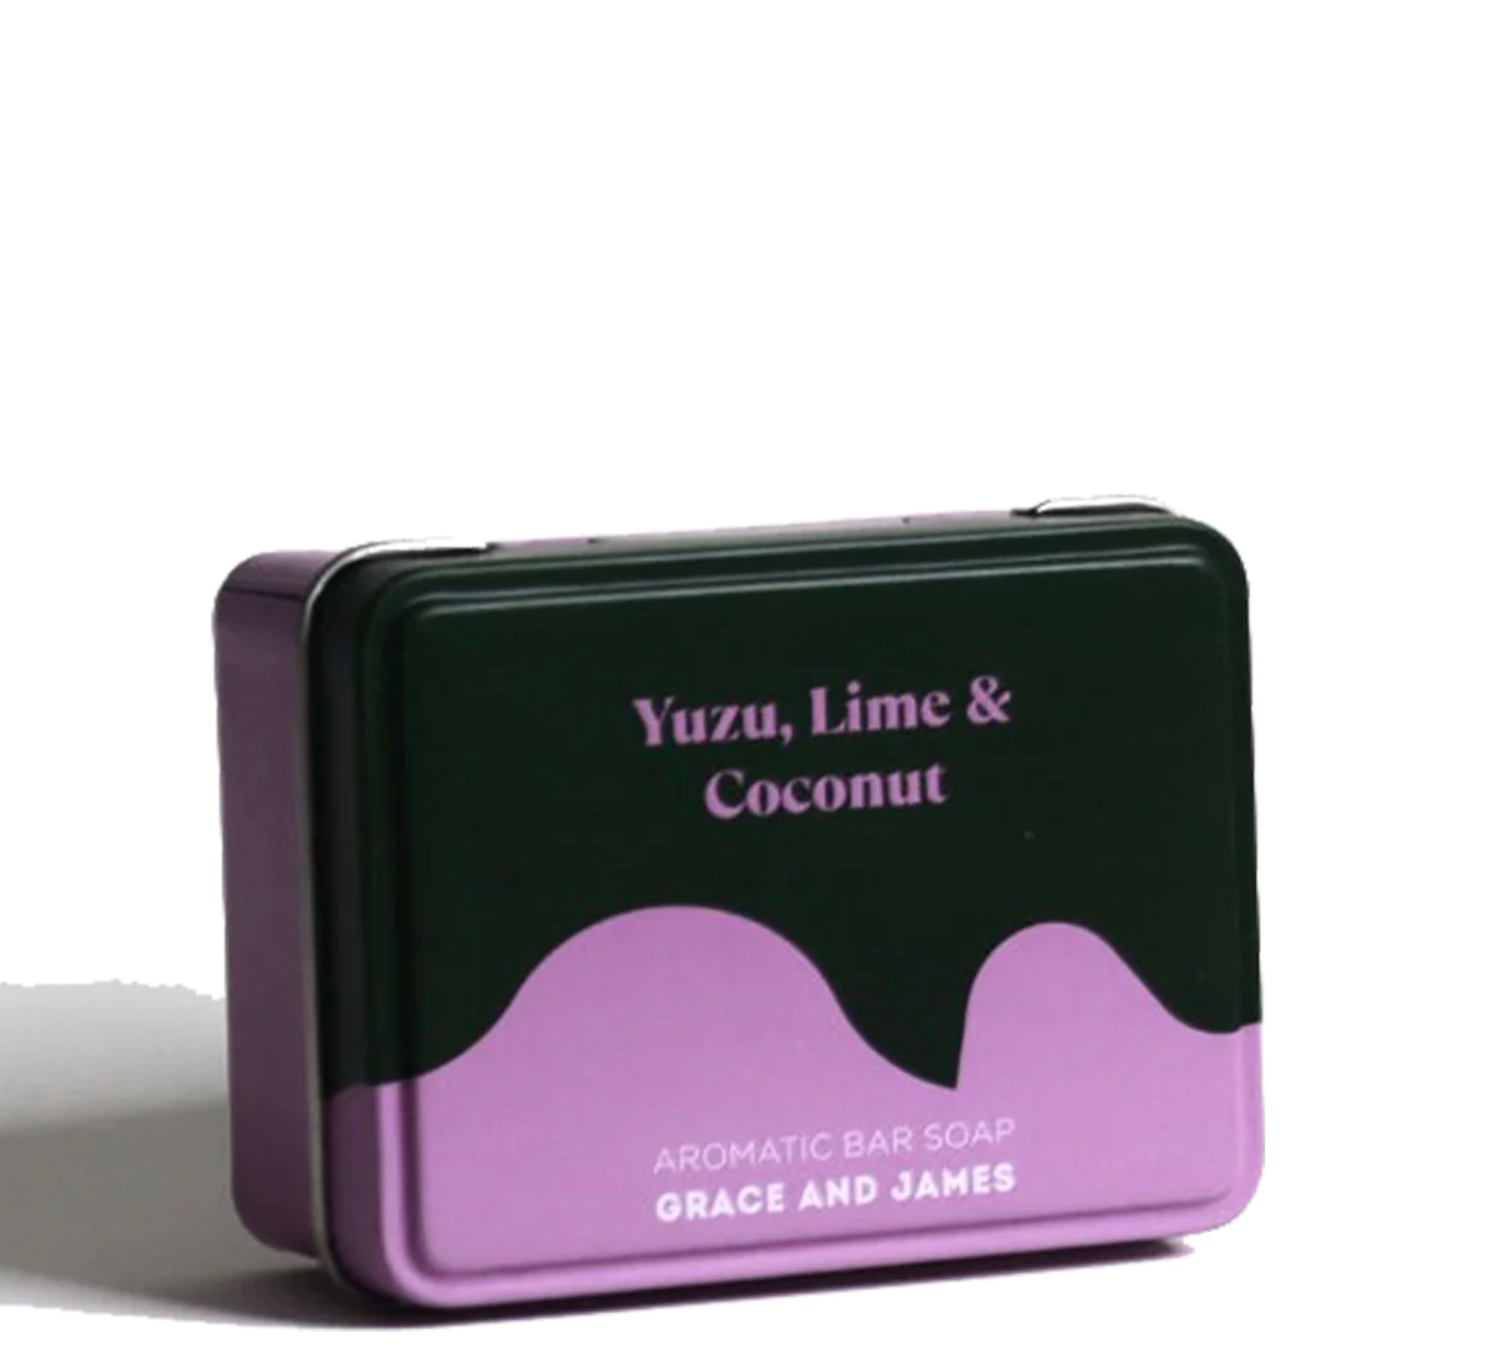 Aromatic Bar Soap / Yuzu, Lime & Coconut (80g)